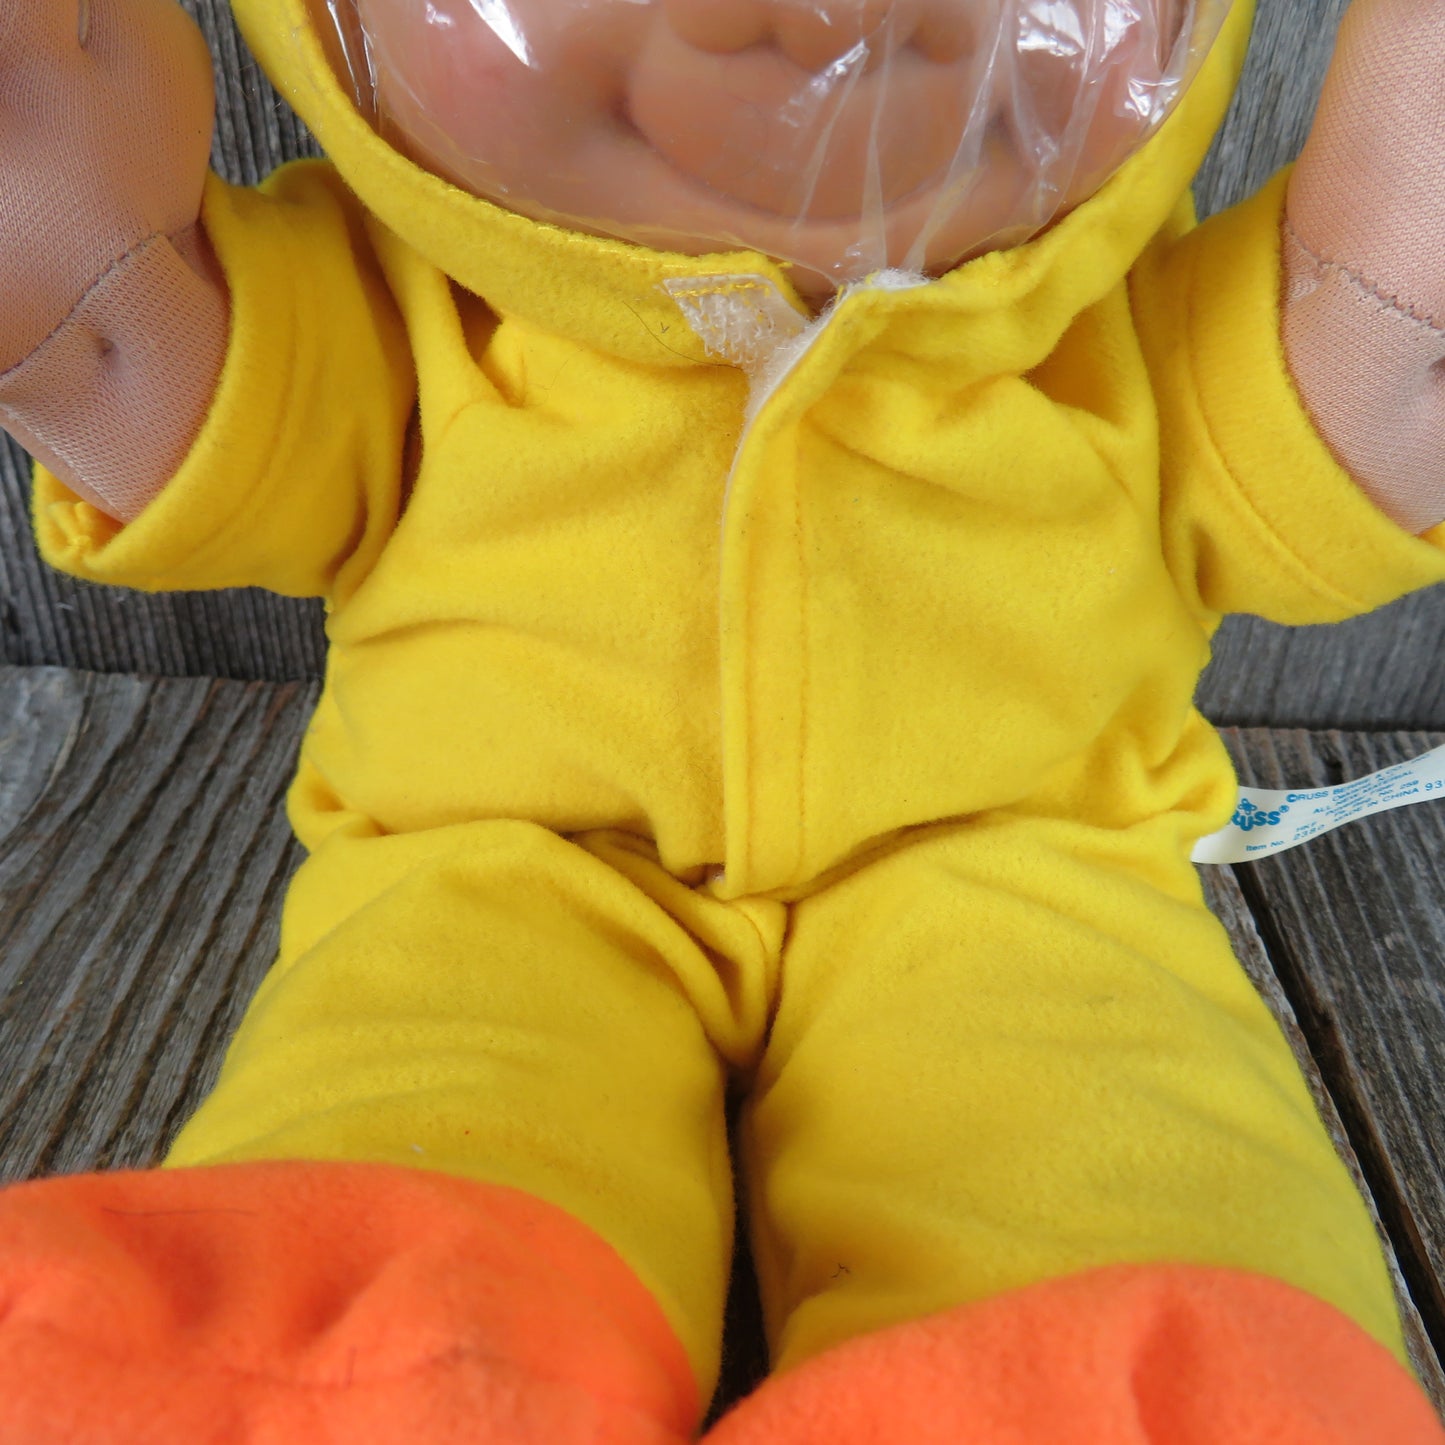 Vintage Troll in Duck Suit Doll Plush Yellow Orange Hair Blue Eyes Russ Berrie Stuffed Animal